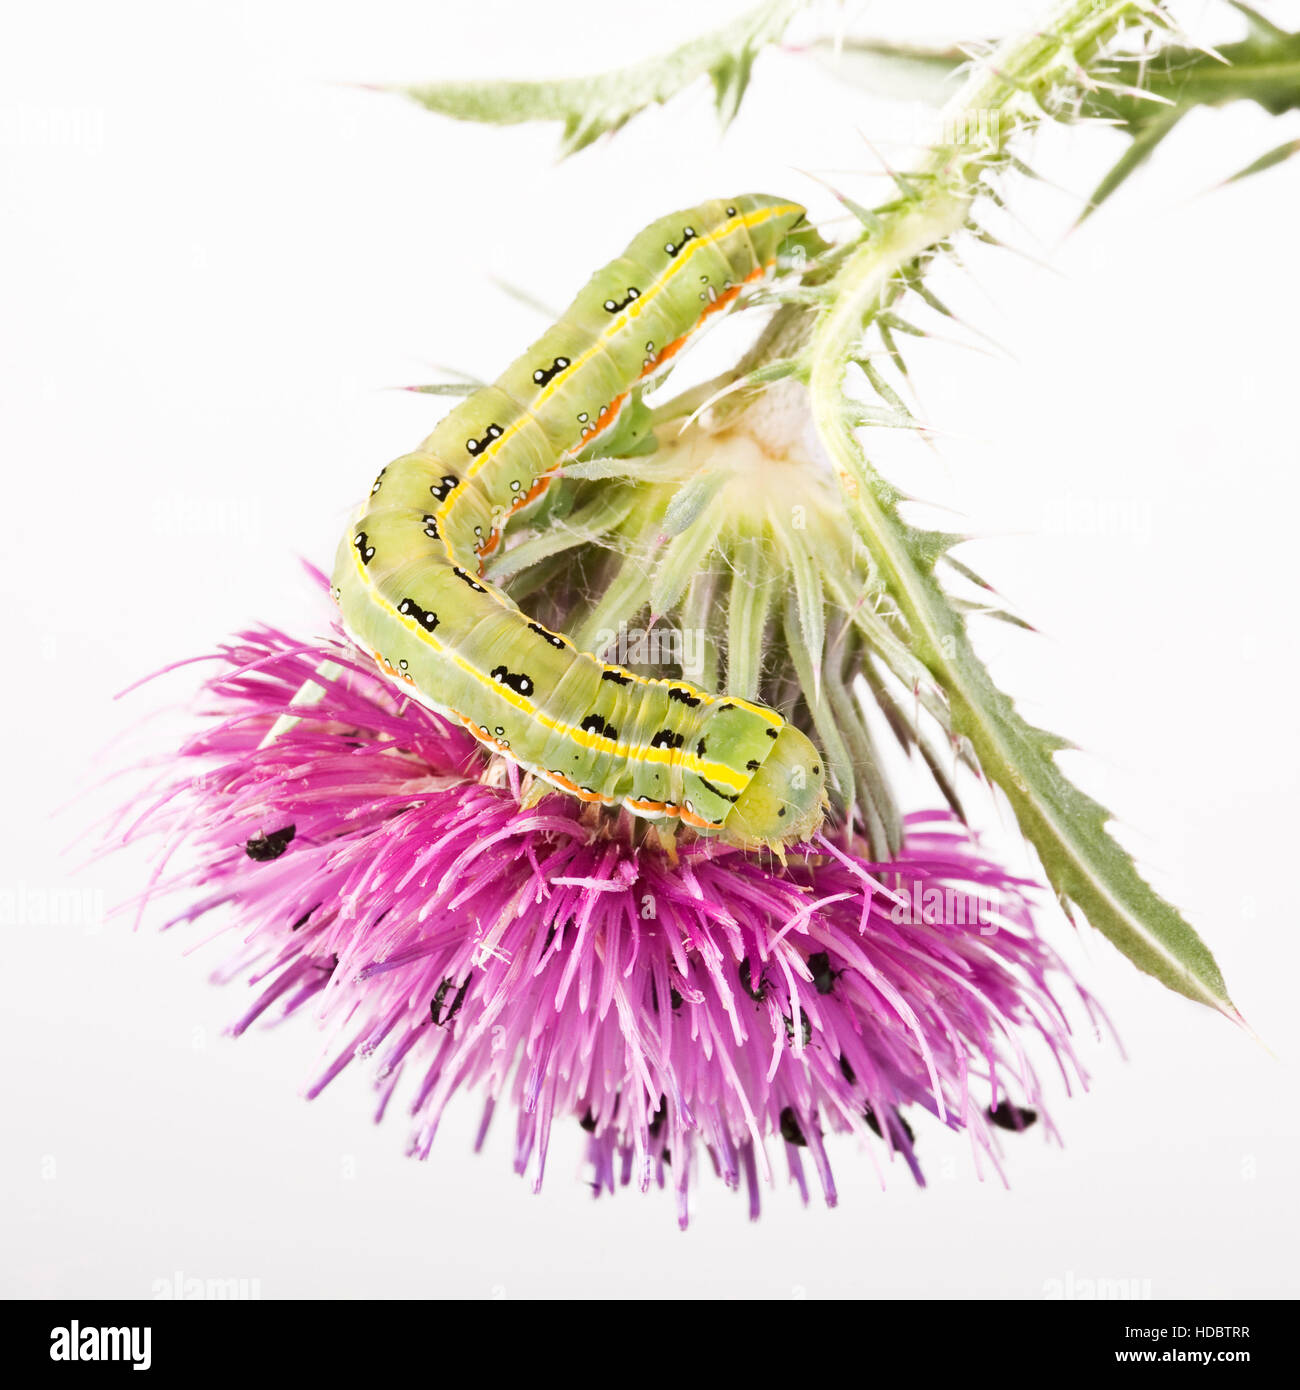 Caterpillar of a Sword-grass Moth (Xylena exsoleta) on a violet coloured flower Stock Photo